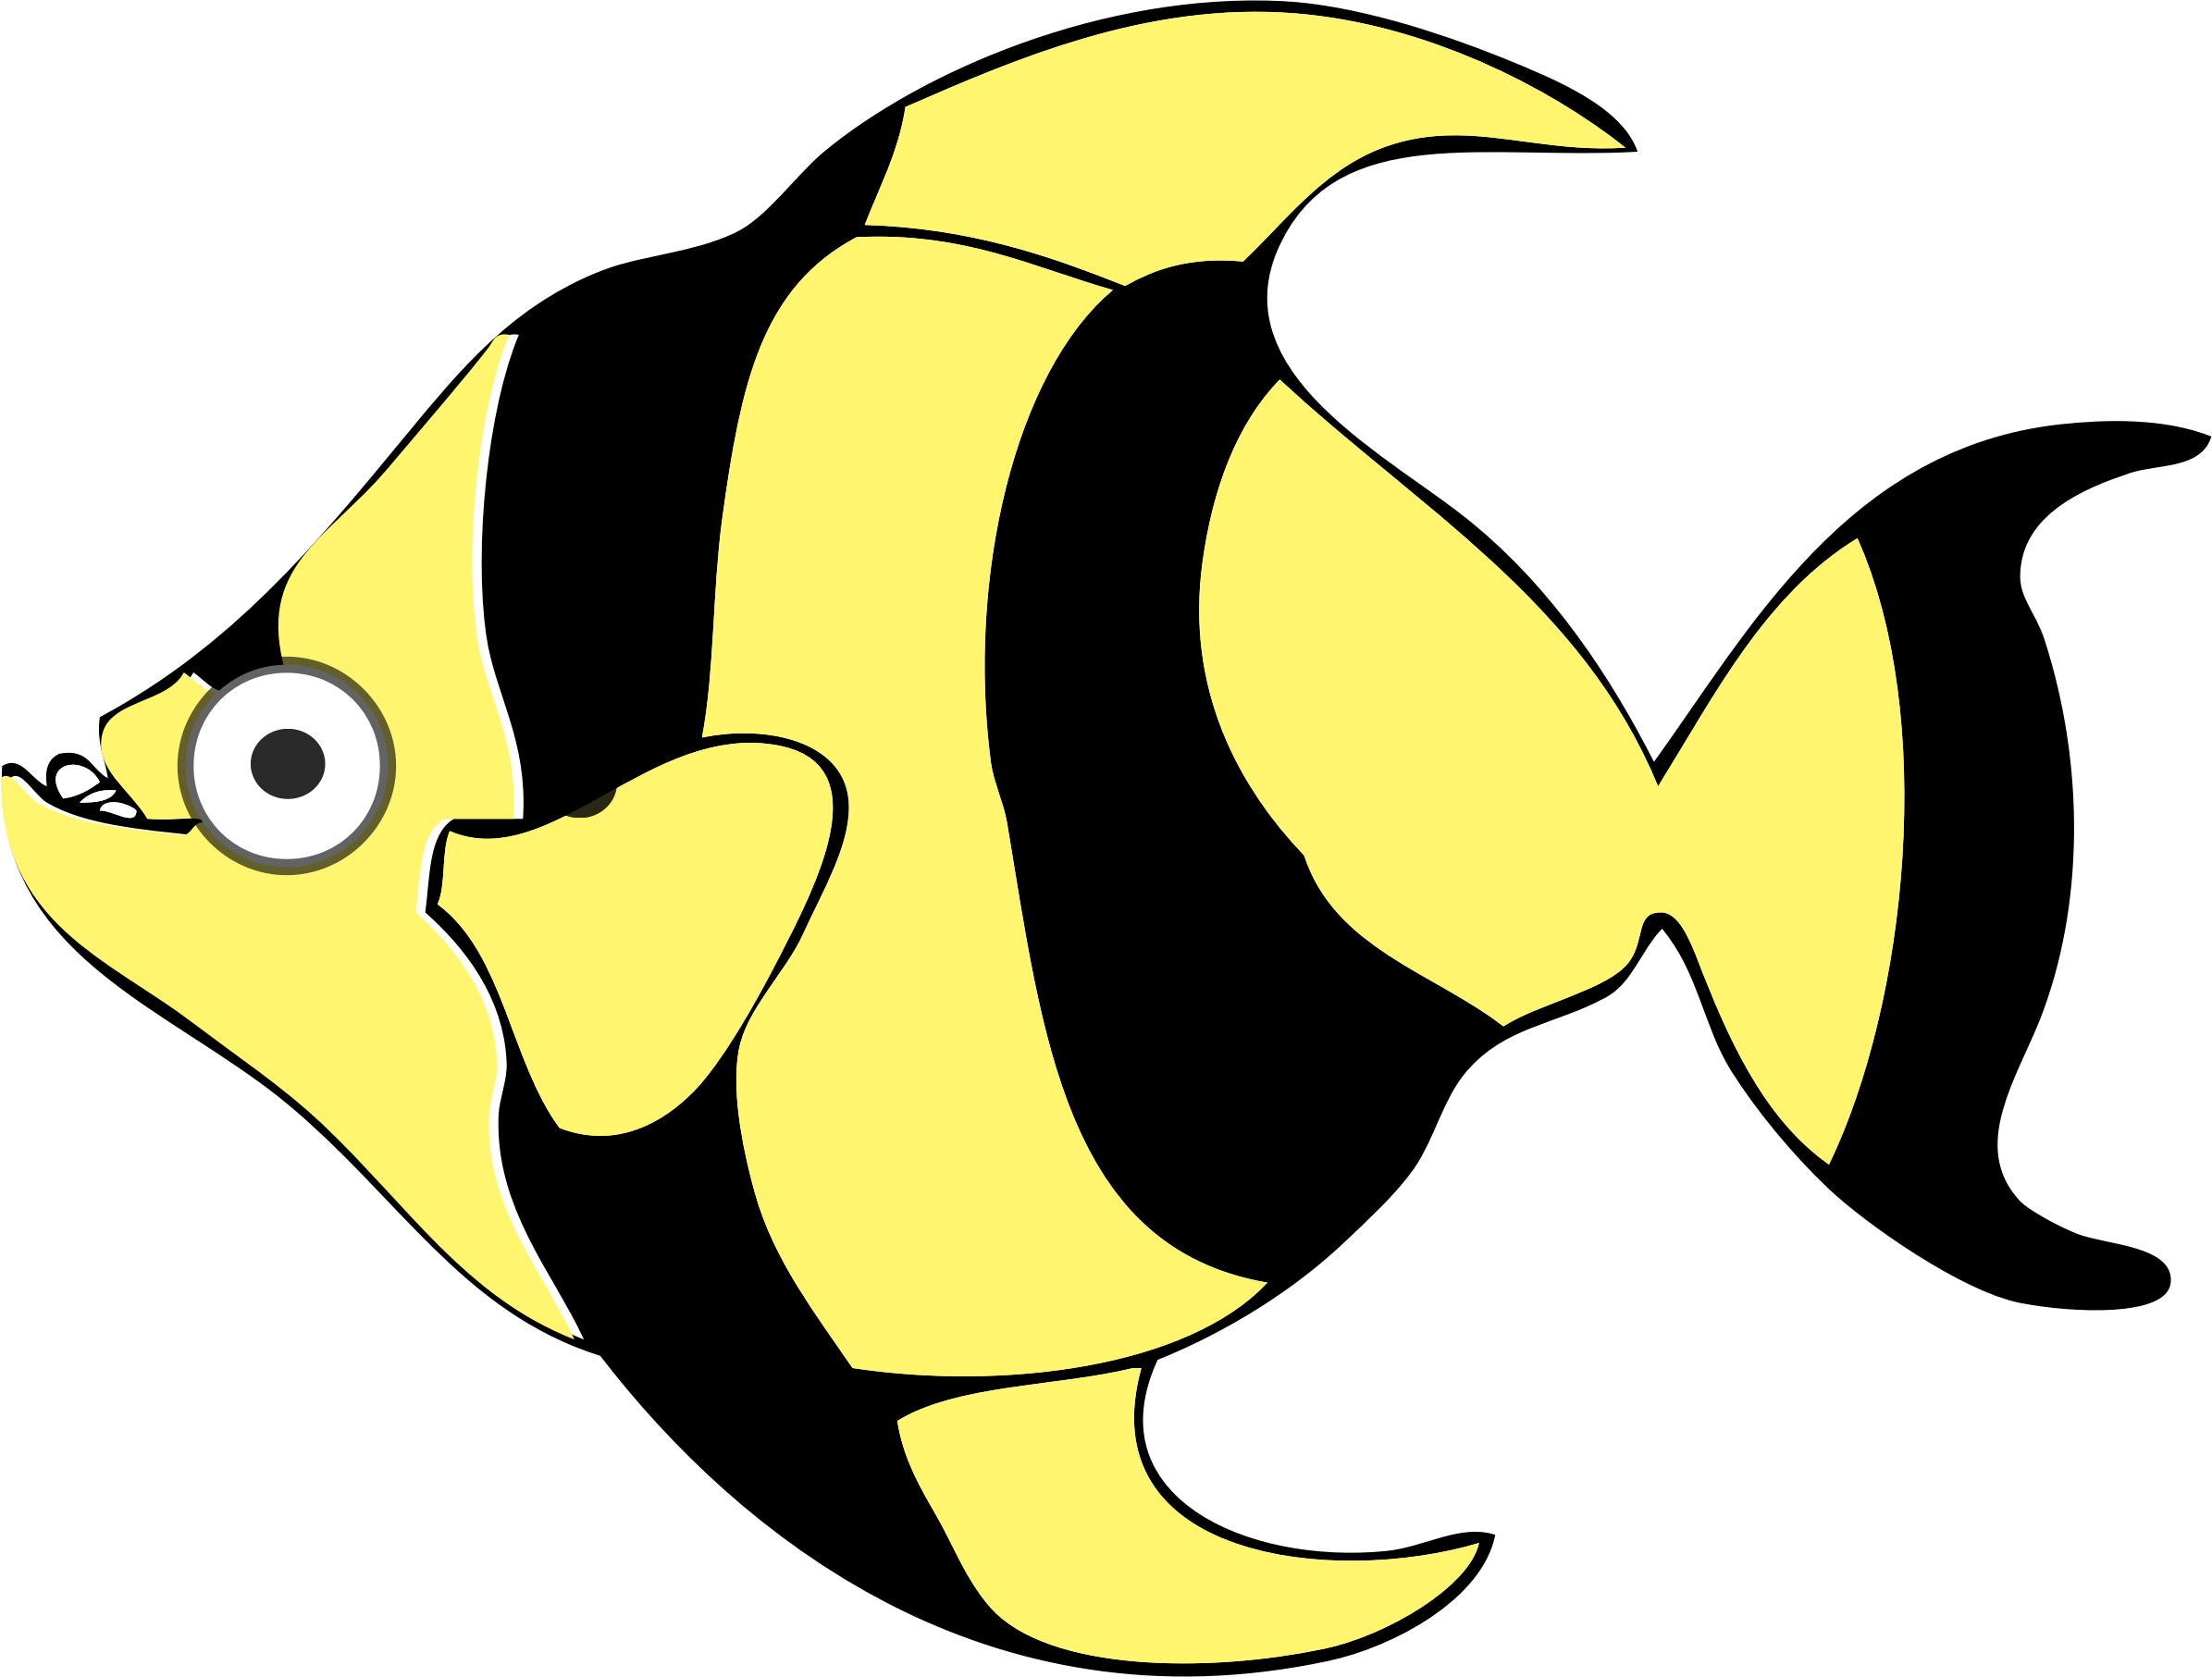 Download Cartoon tropical fish Vector Clipart image - Free stock photo - Public Domain photo - CC0 Images